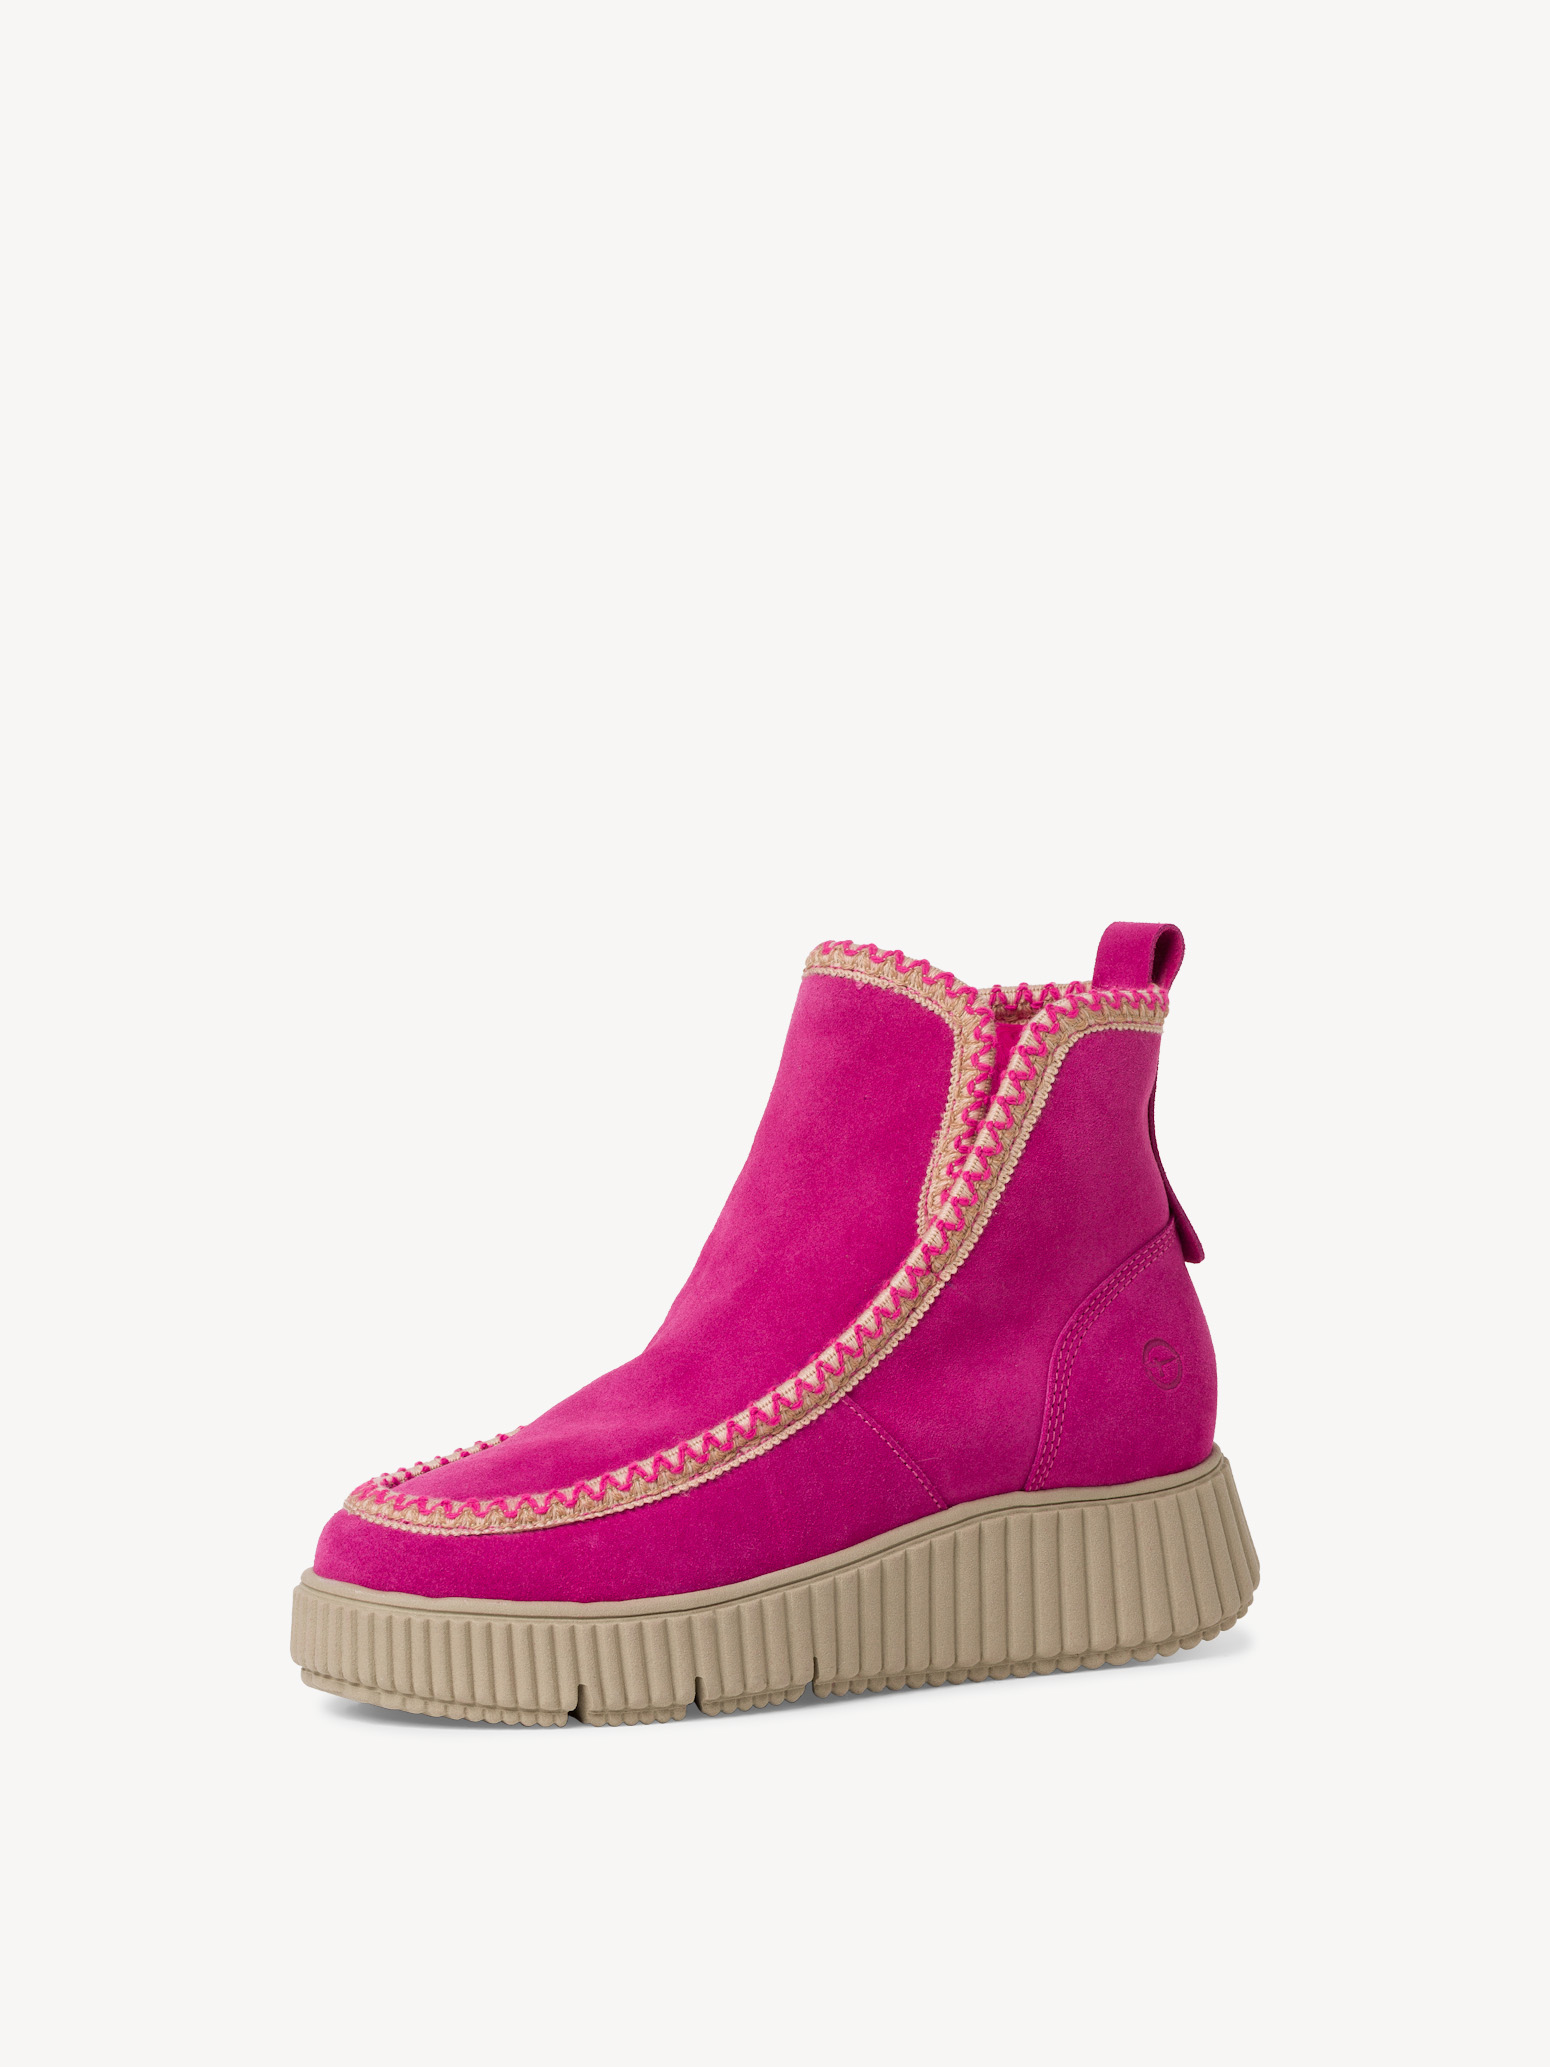 Lederstiefelette - pink Warmfutter online 1-26865-41-513: & Stiefeletten kaufen! Tamaris Boots